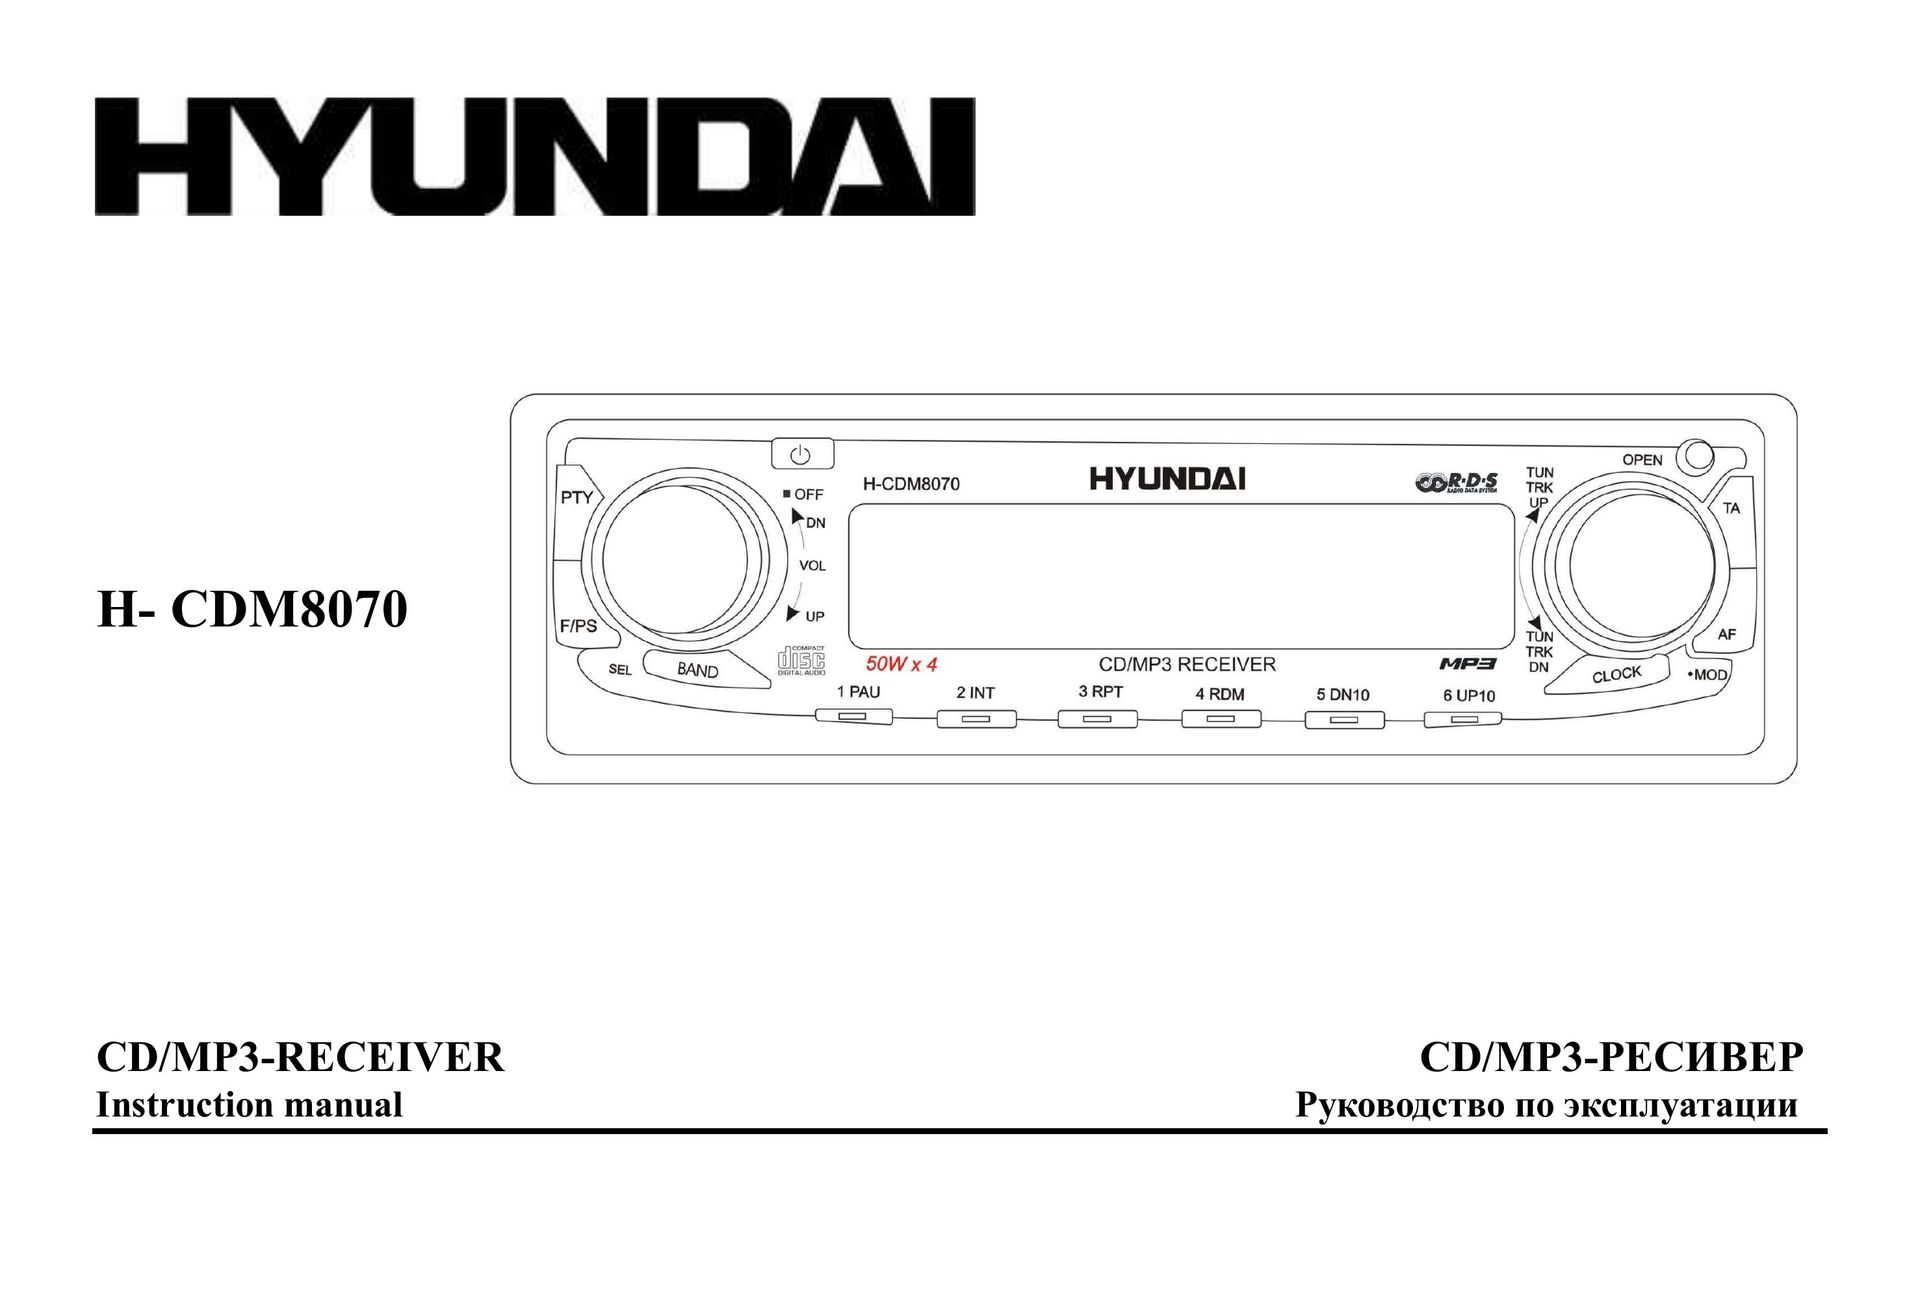 Hyundai CD/MP3-Receiver Car Satellite Radio System User Manual